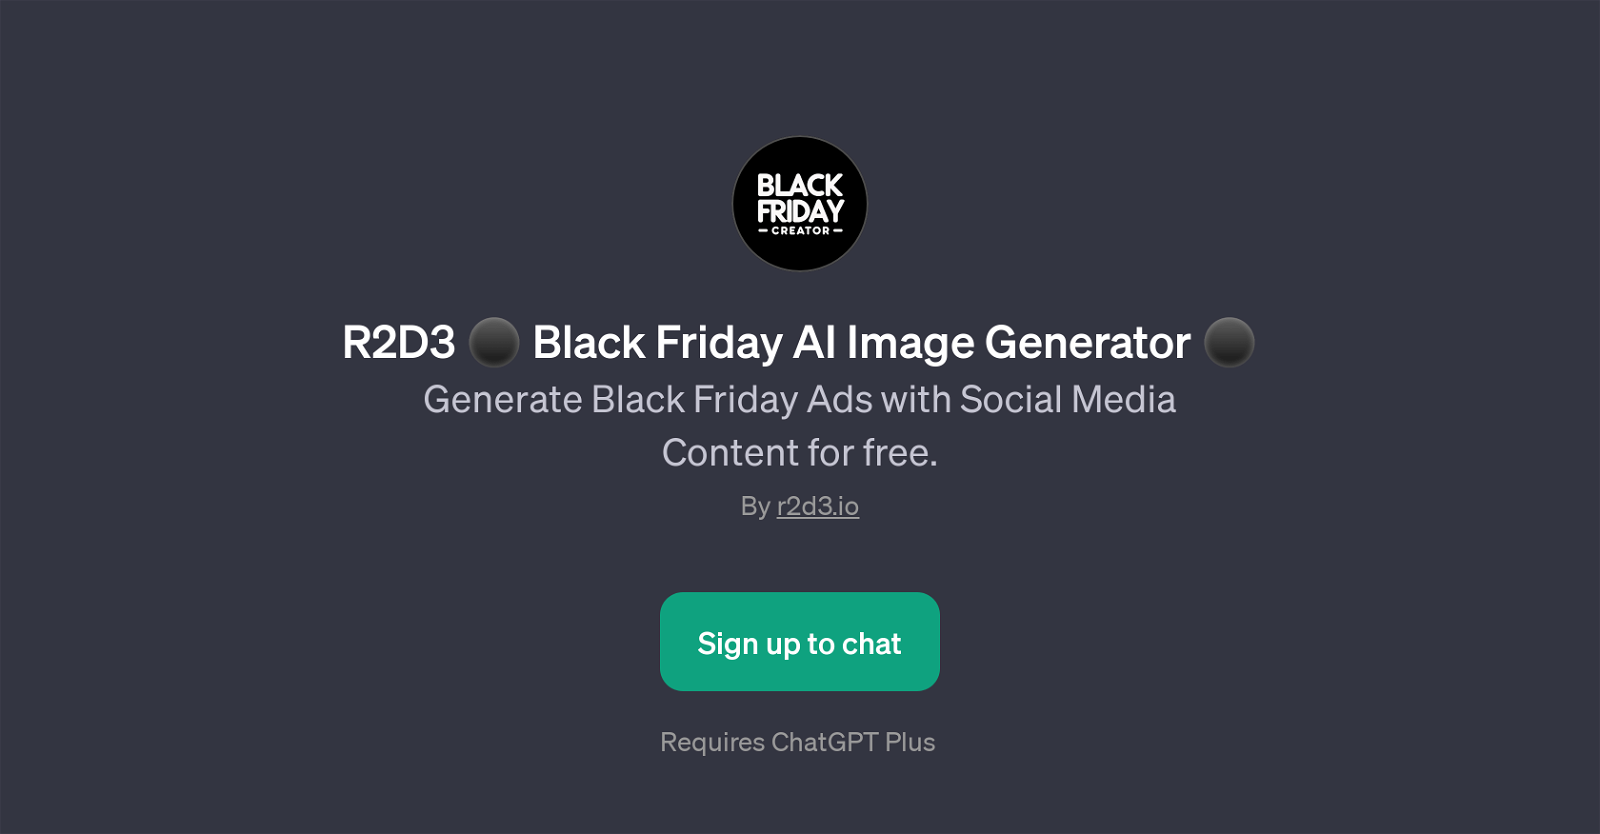 R2D3 Black Friday AI Image Generator website